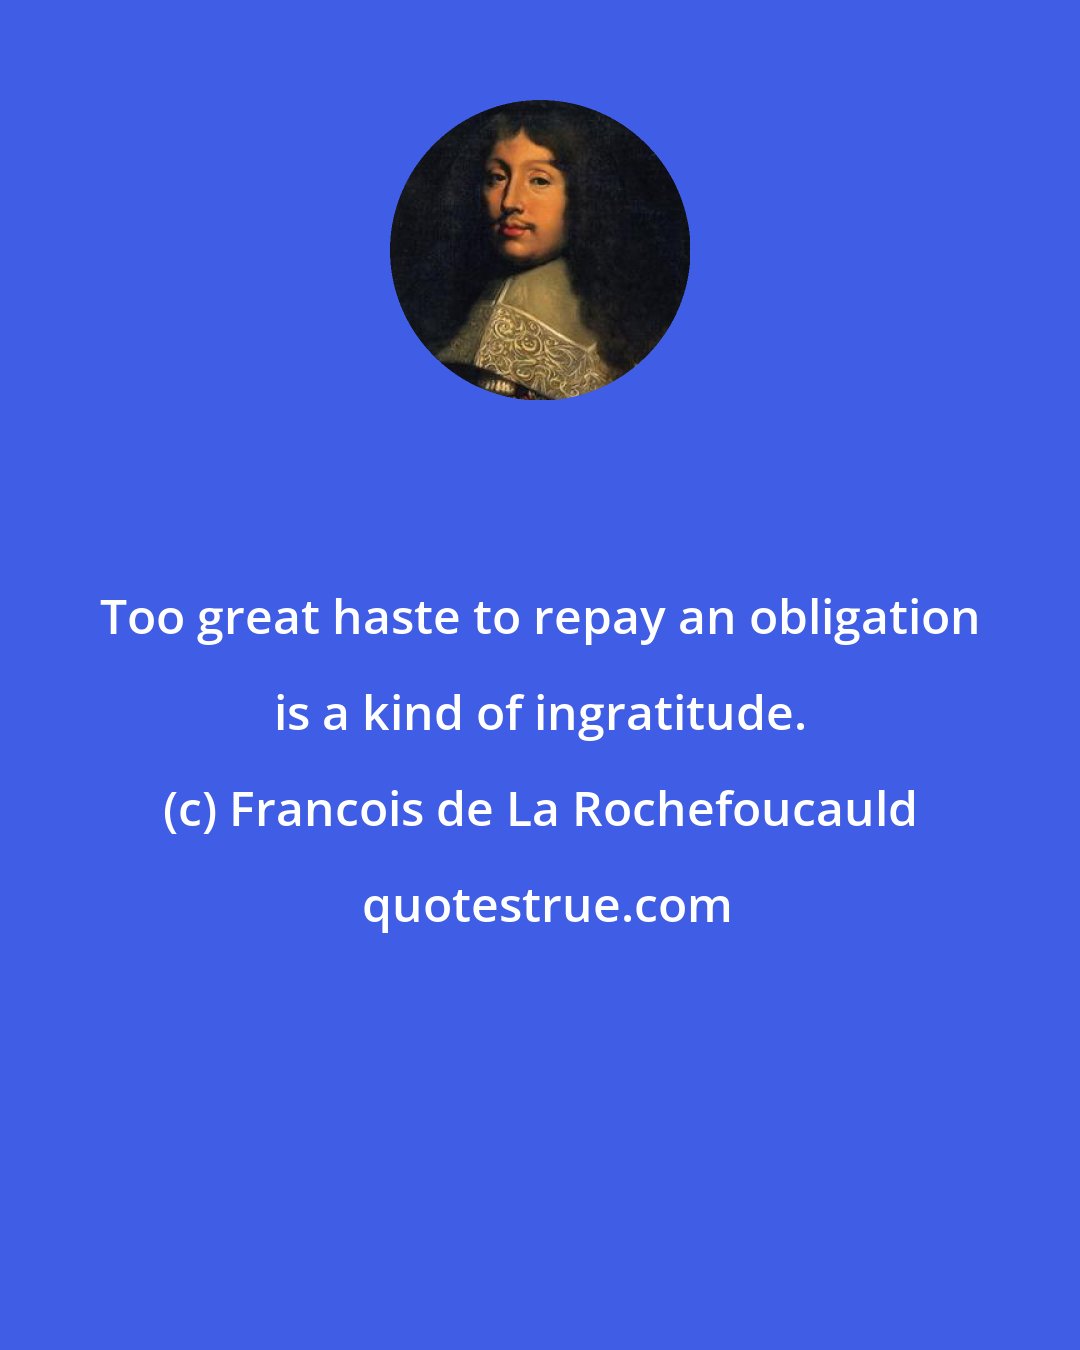 Francois de La Rochefoucauld: Too great haste to repay an obligation is a kind of ingratitude.